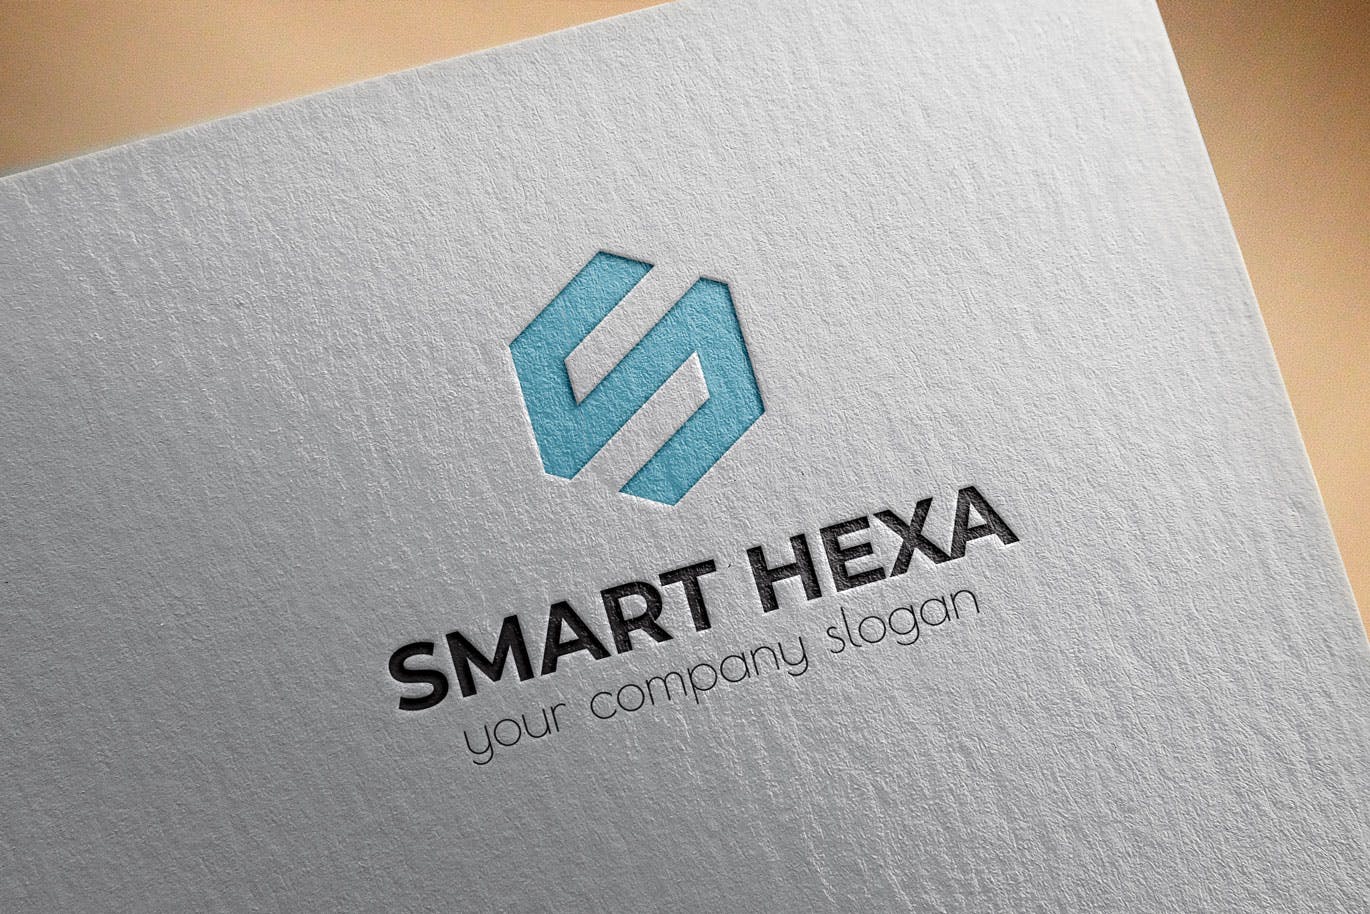 S字母图形Logo设计蚂蚁素材精选模板 Smart Hexa Awesome Logo Template插图(2)